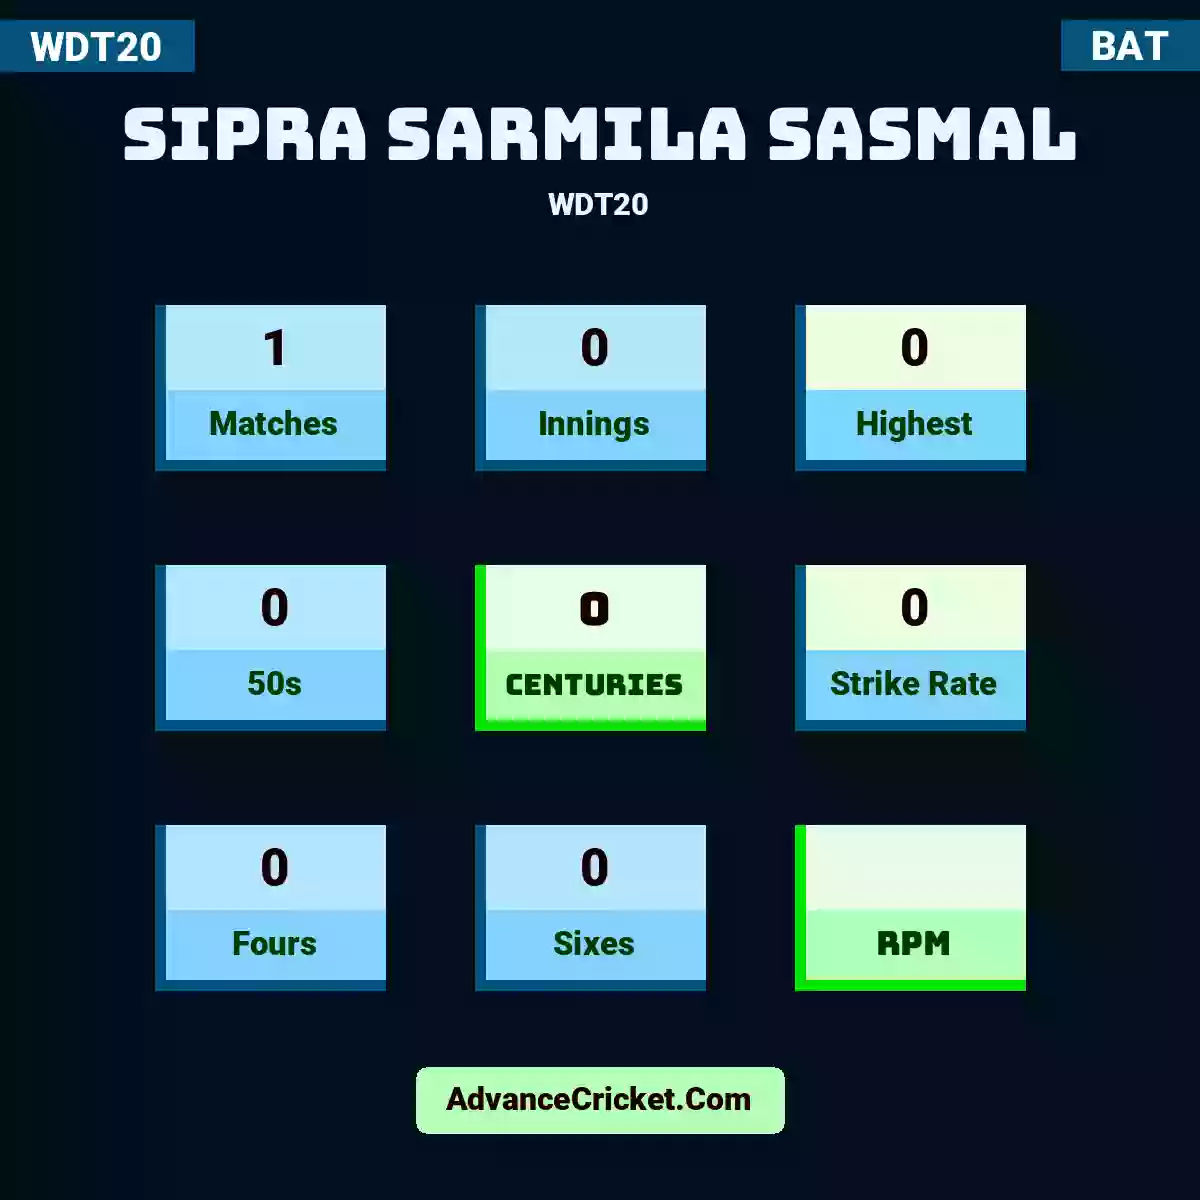 Sipra Sarmila Sasmal WDT20 , Sipra Sarmila Sasmal played 1 matches, scored 0 runs as highest, 0 half-centuries, and 0 centuries, with a strike rate of 0. S.Sarmila Sasmal hit 0 fours and 0 sixes.